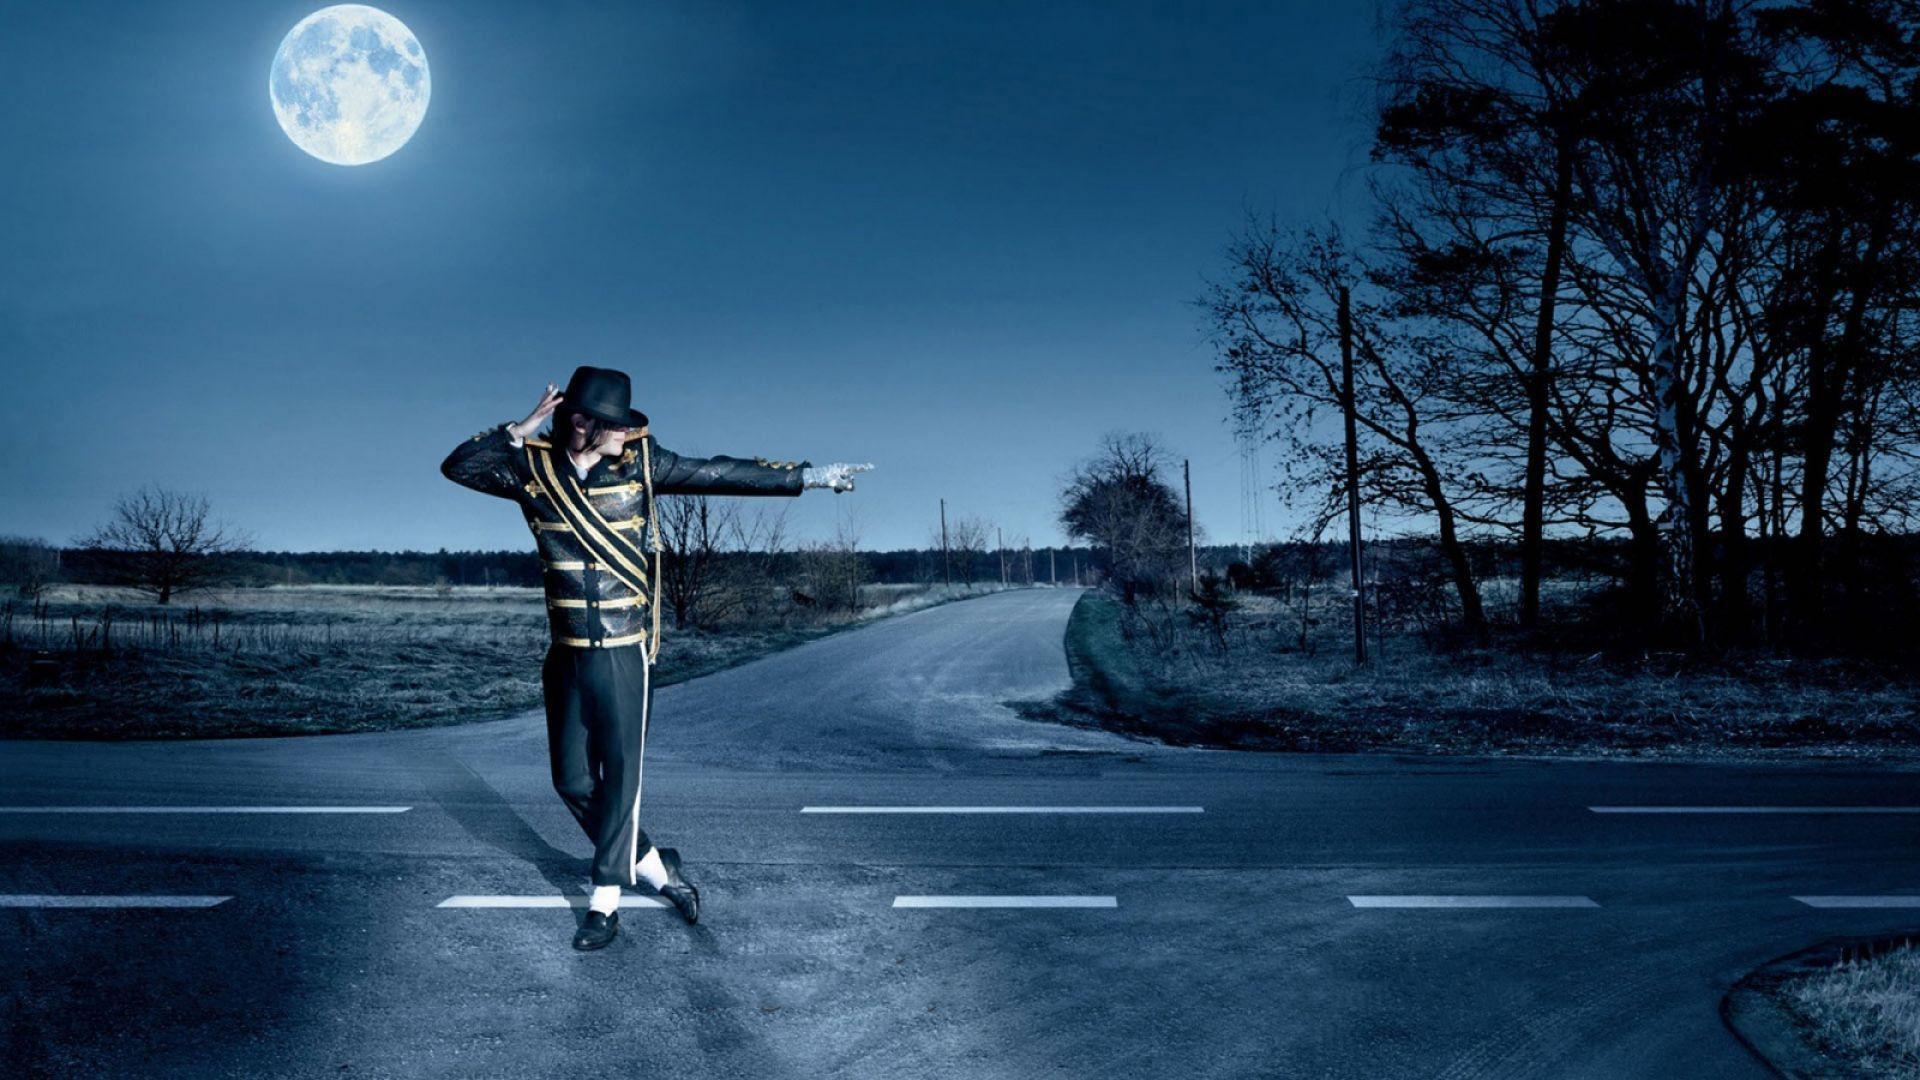 Michael Jackson Dance. HD Dance and Music Wallpaper for Mobile